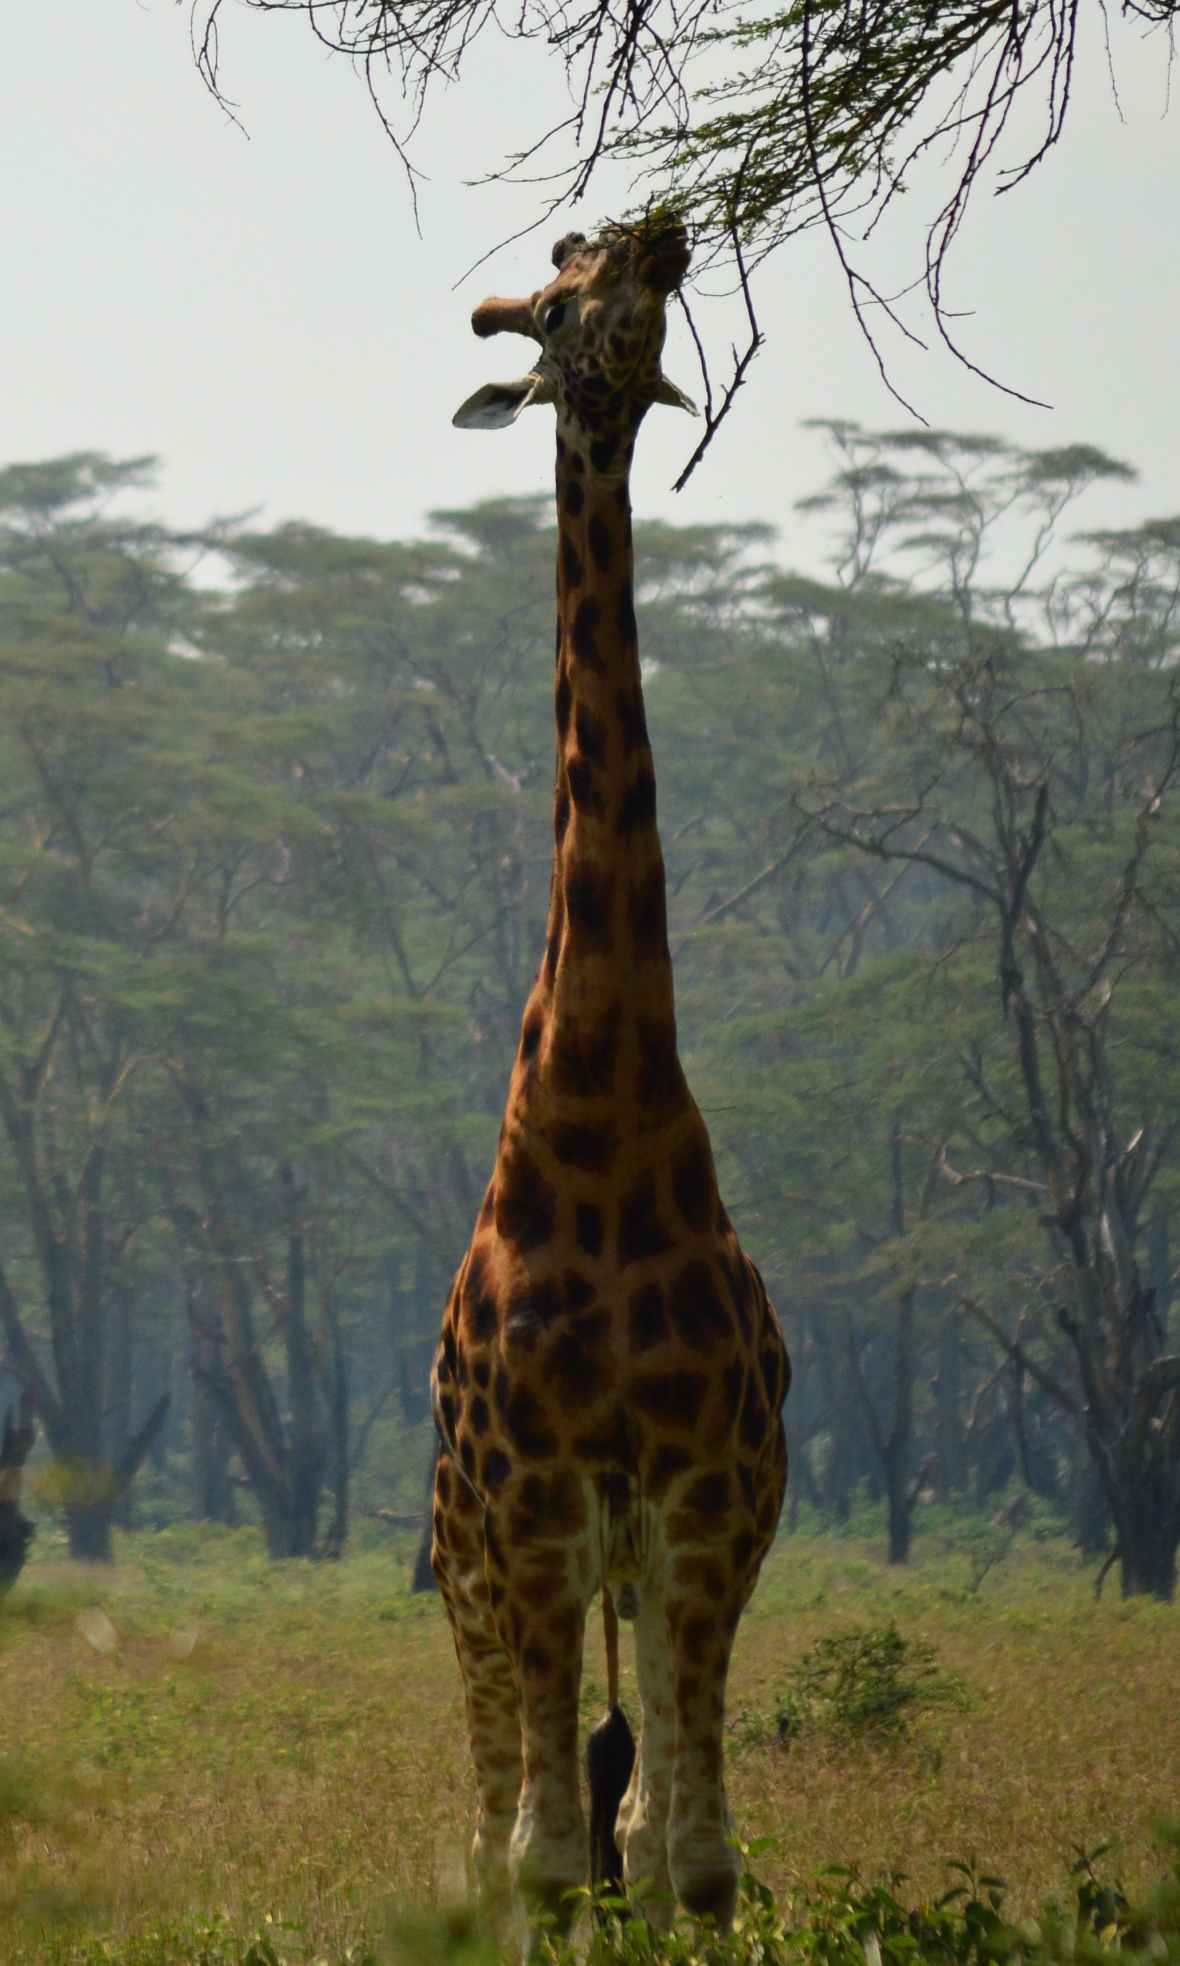 Giraffe reaching for a bite in Lake Nakuru National Park, Kenya